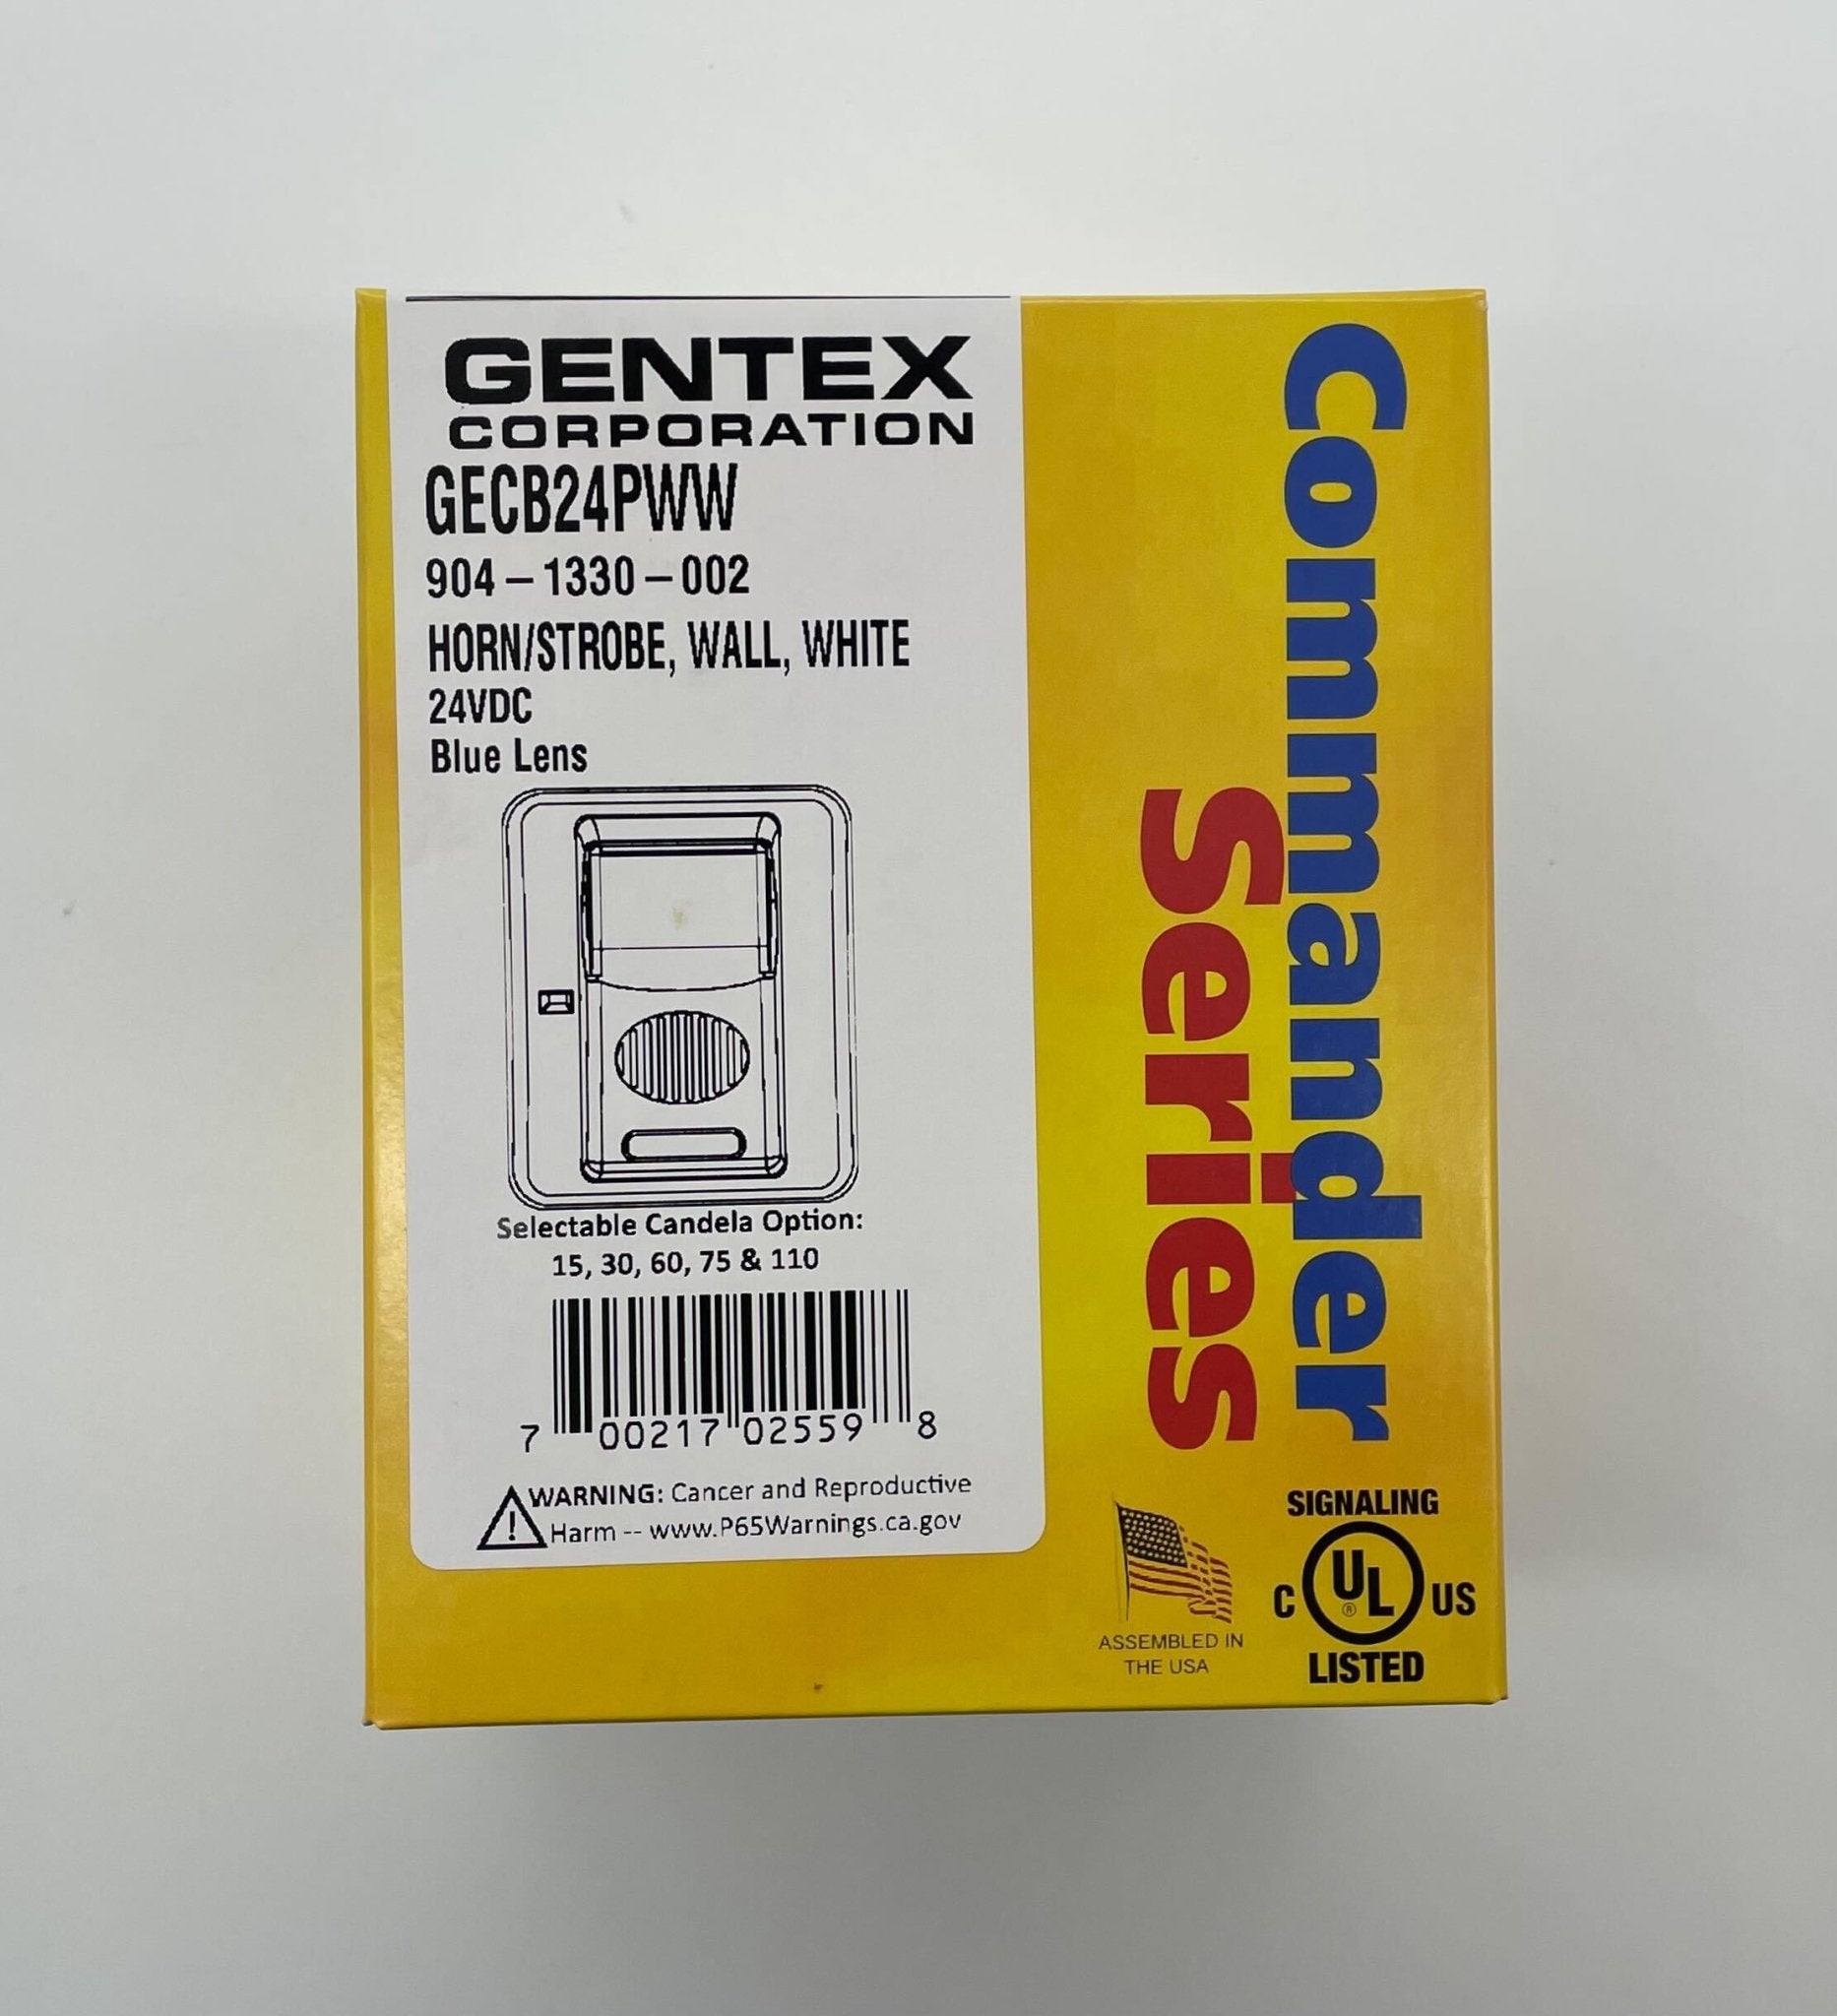 Gentex GECB24PWW - The Fire Alarm Supplier